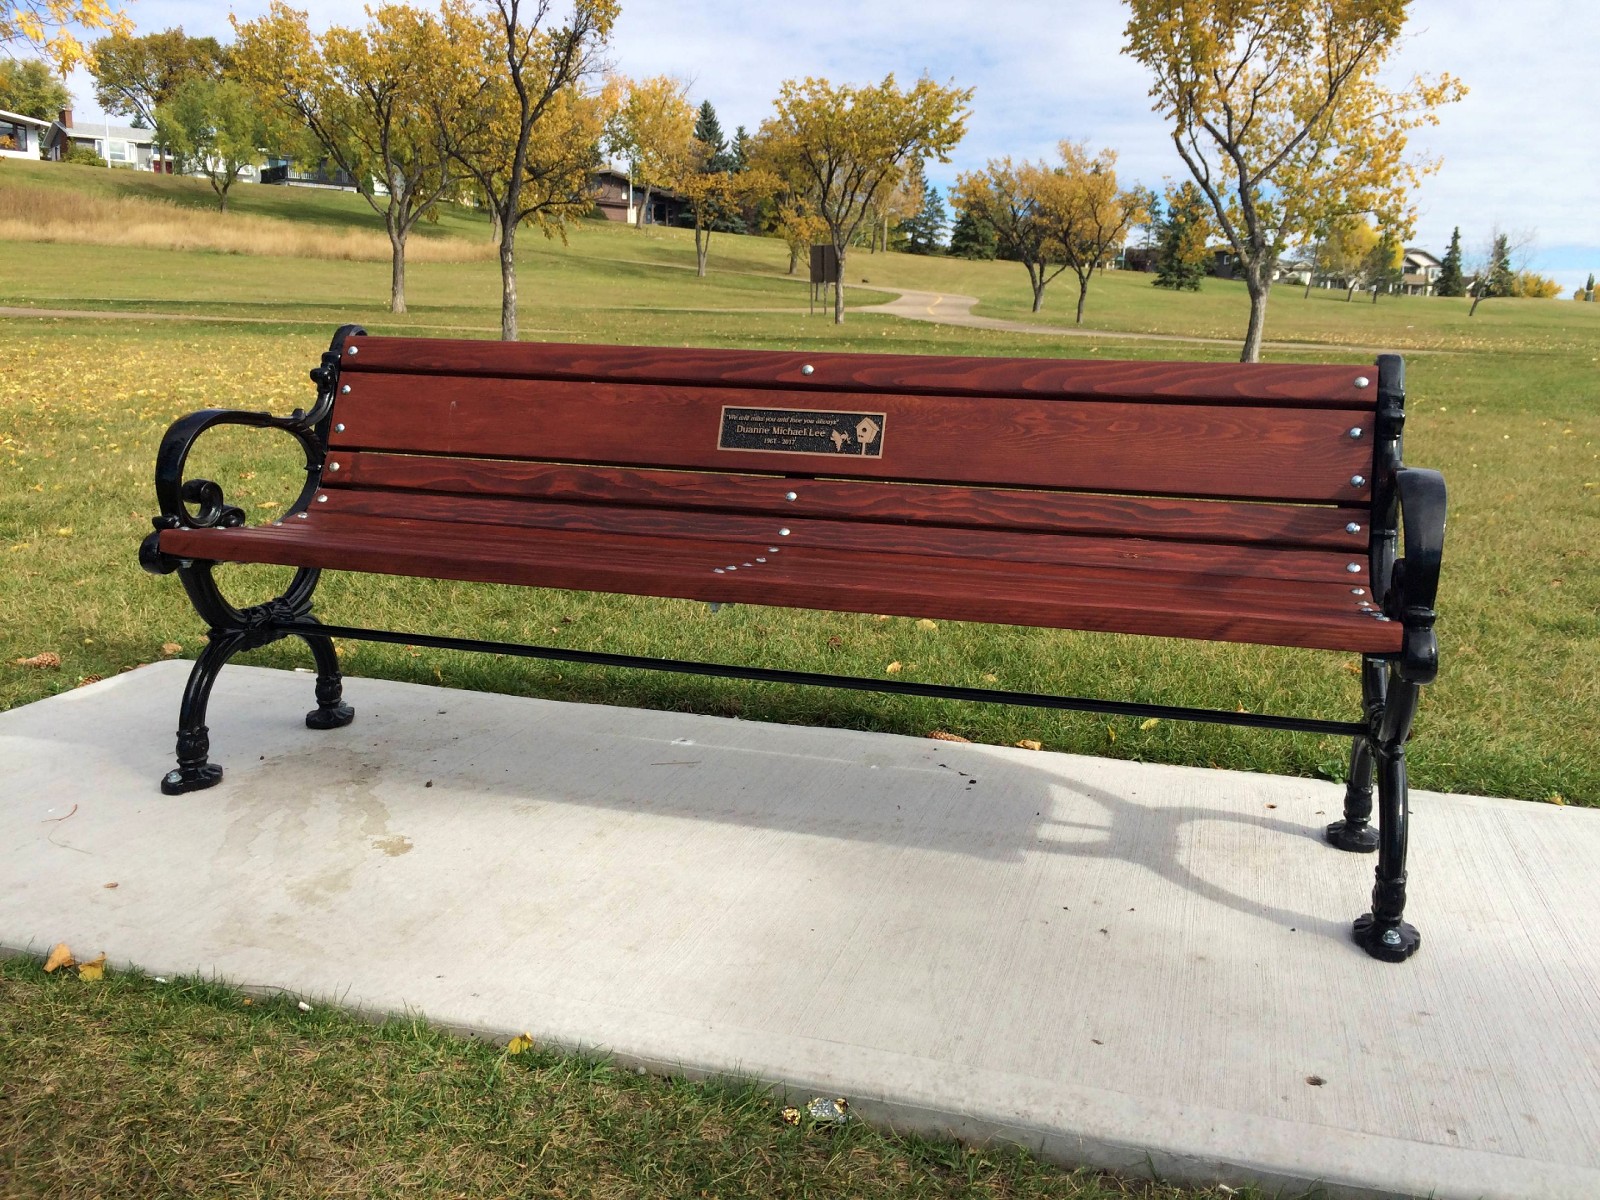 Heritage Bench in park